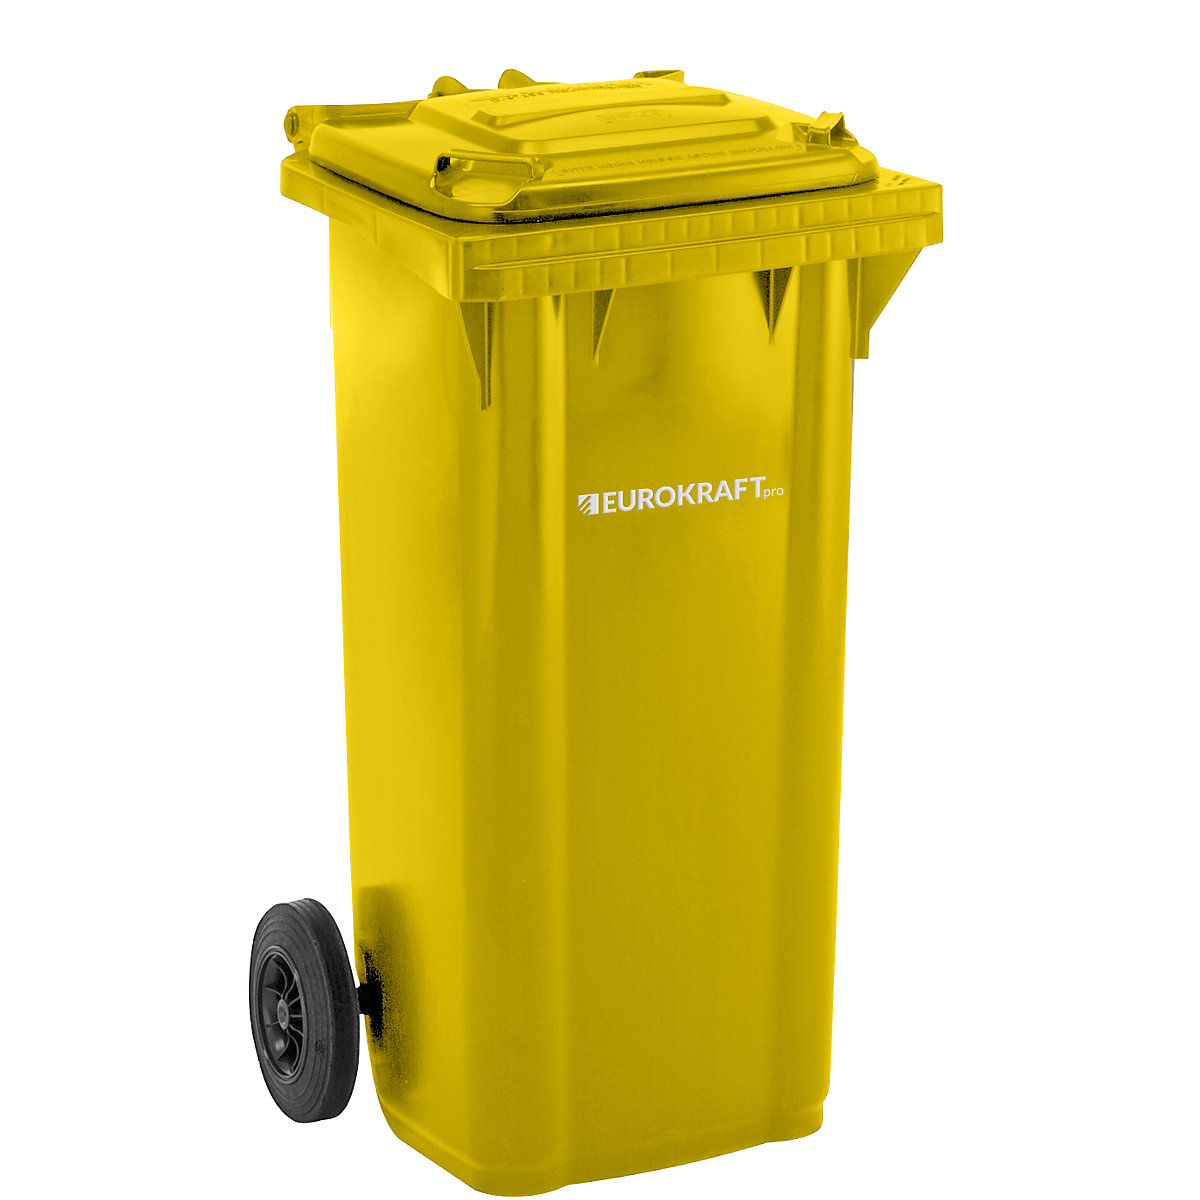 Contenedor de basura de plástico DIN EN 840 – eurokraft pro, capacidad 120 l, A x H x P 505 x 1005 x 555 mm, amarillo-5